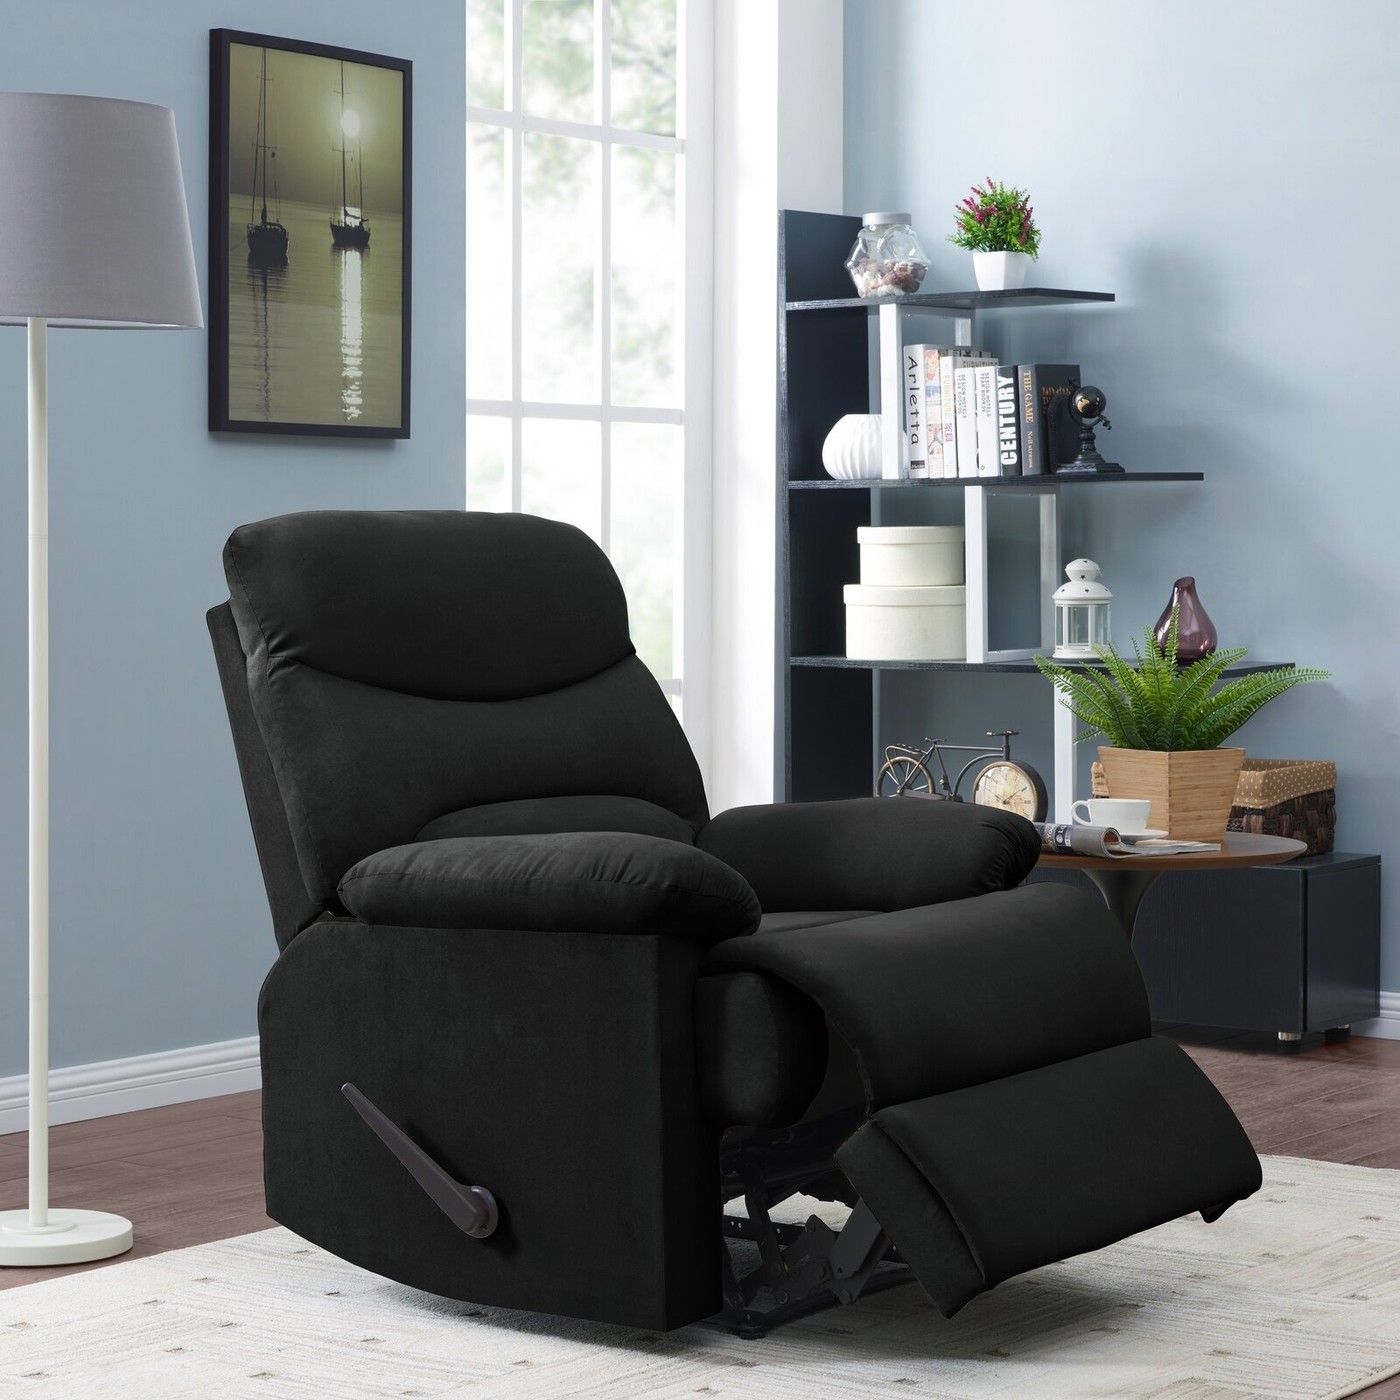 Details about   Wall Hugger Recliners Armchair Recliner Arm Chair Chairs Armchairs Living Room 